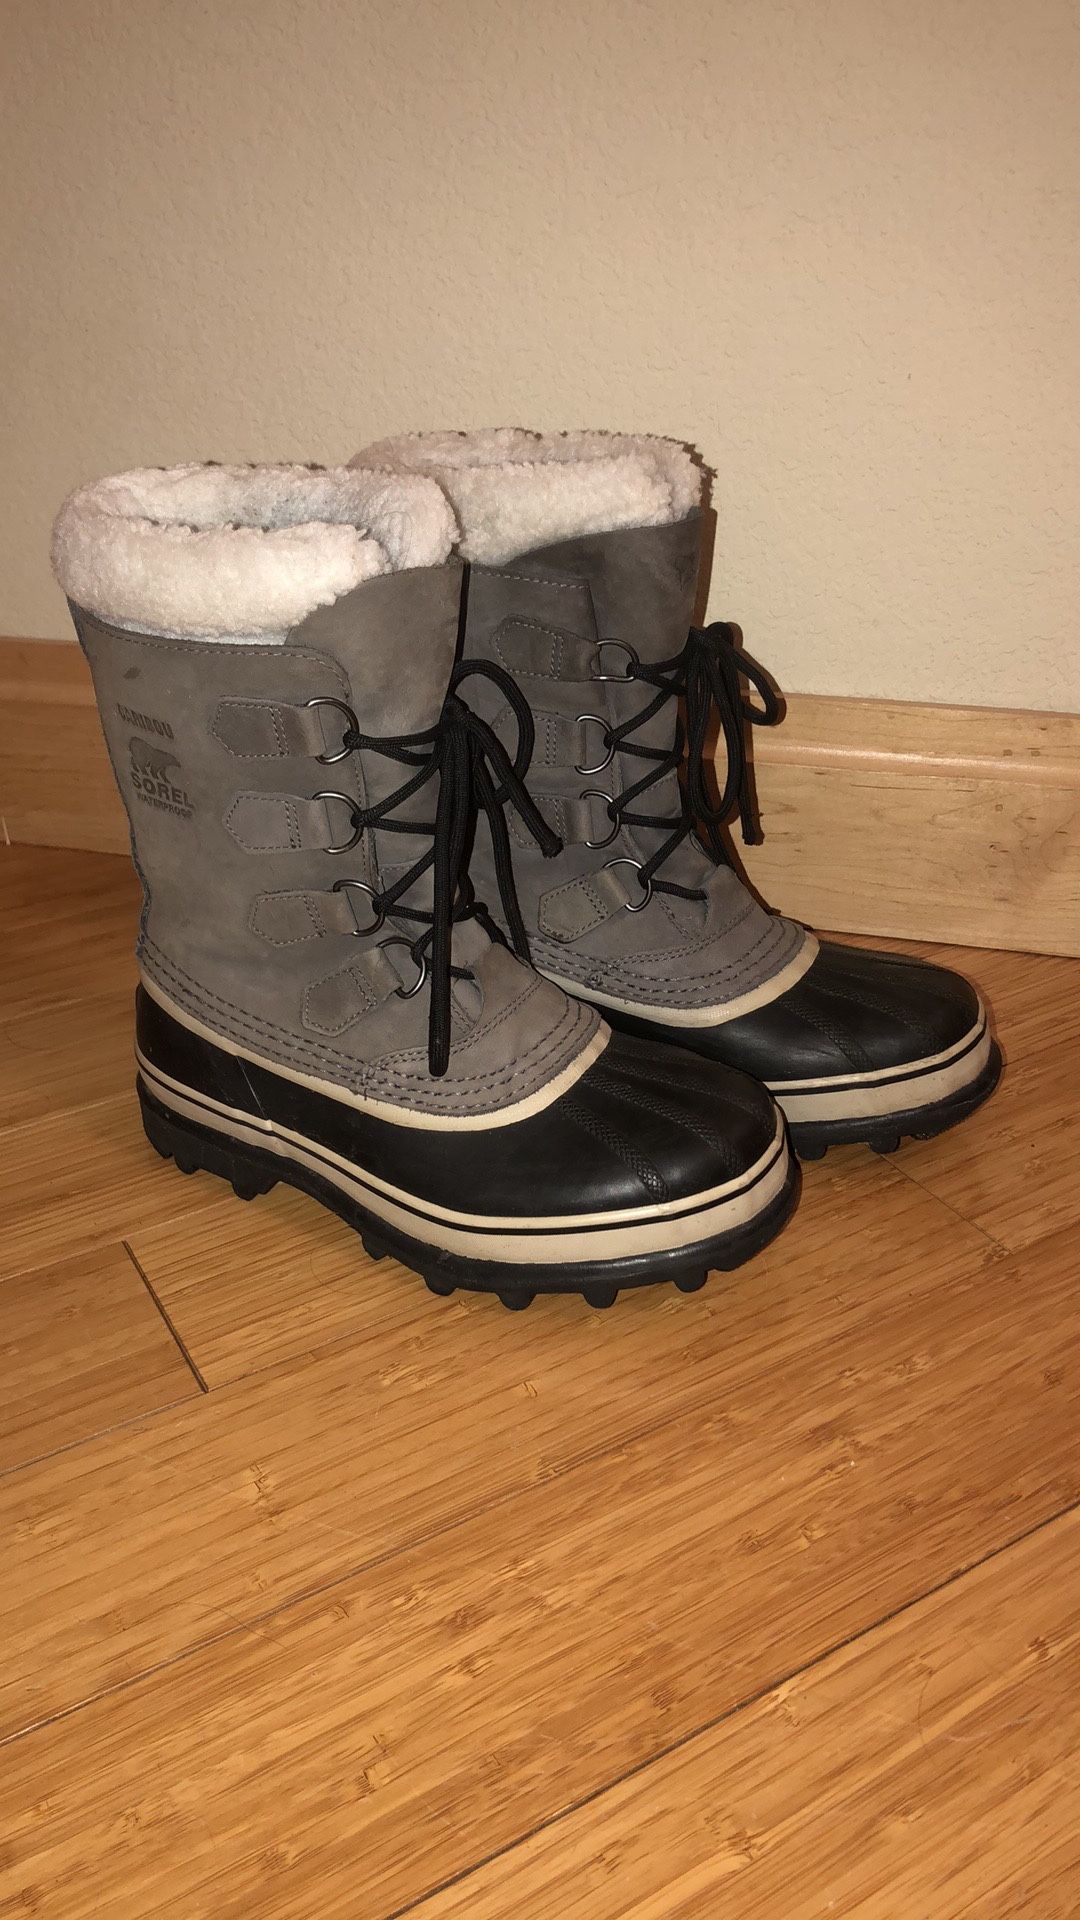 Sorel Winter Snow Boots Women’s Size 7.5